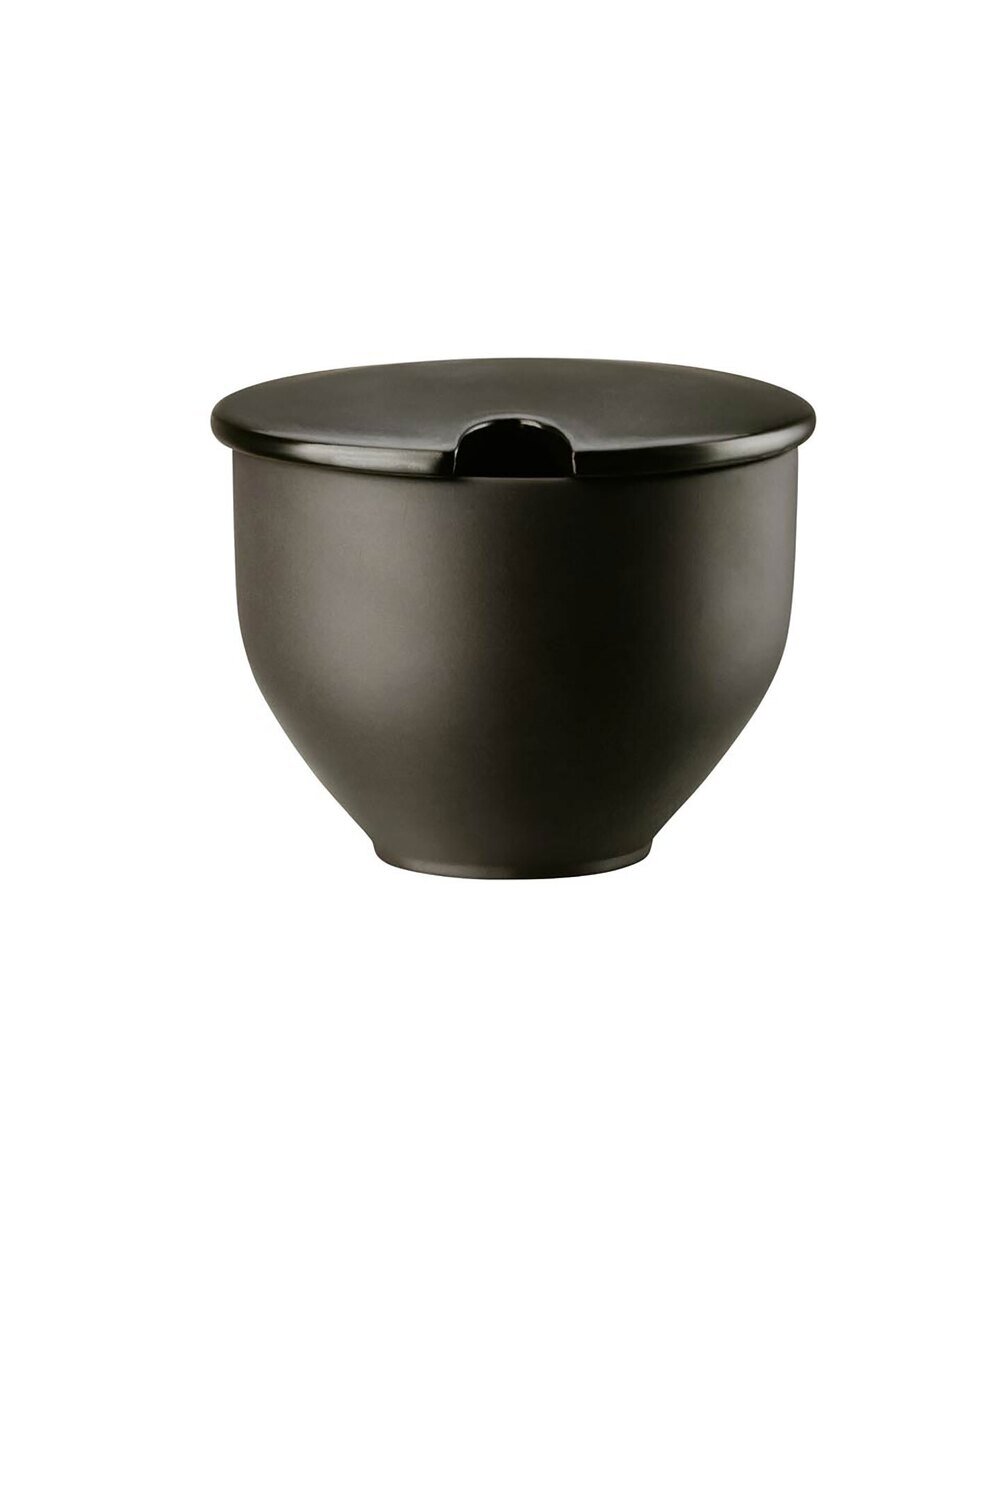 Rosenthal Junto -Slate Grey Stoneware Covered Sugar Bowl Set w indent 8 1/2 oz